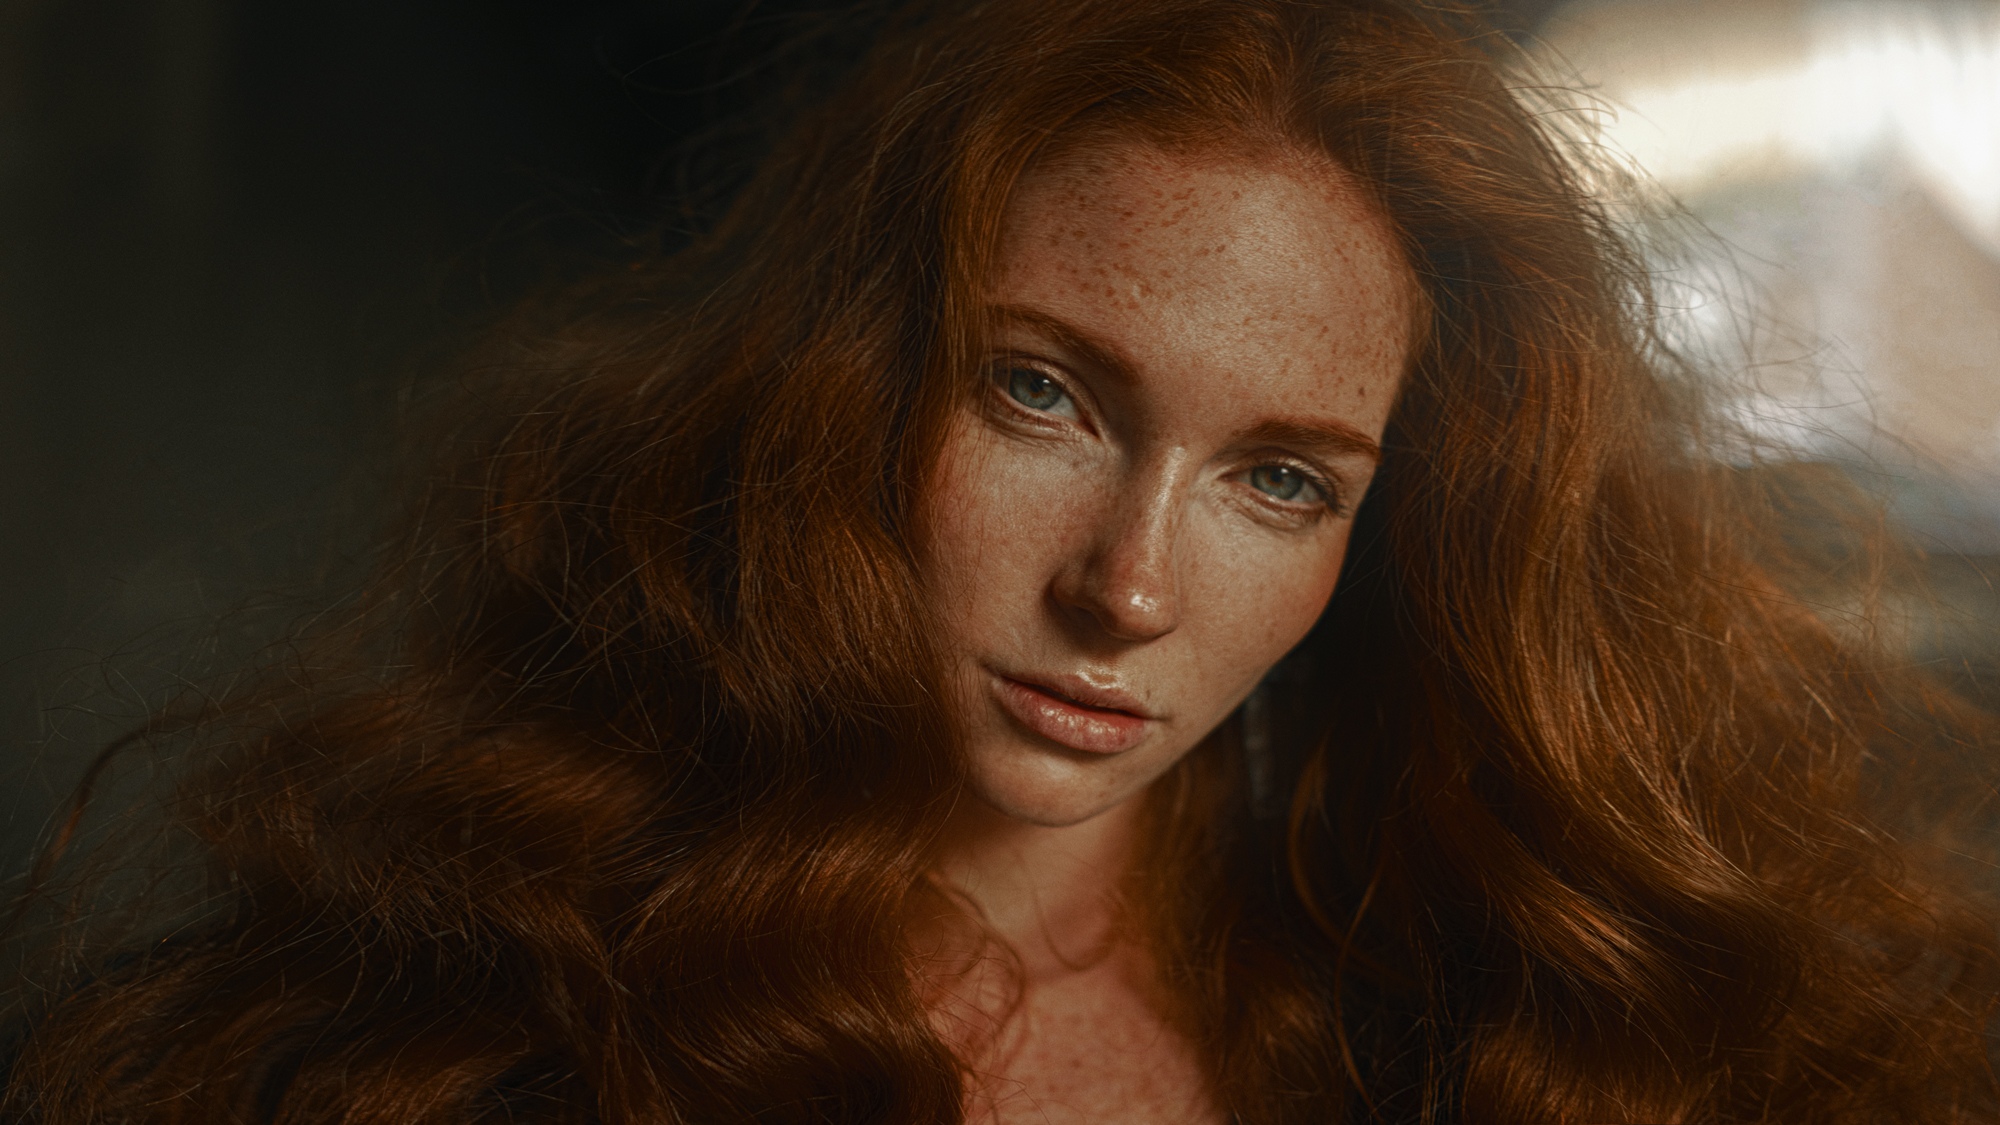 People 2000x1125 women model face redhead looking at viewer long hair freckles Oksana Butovskaya closeup